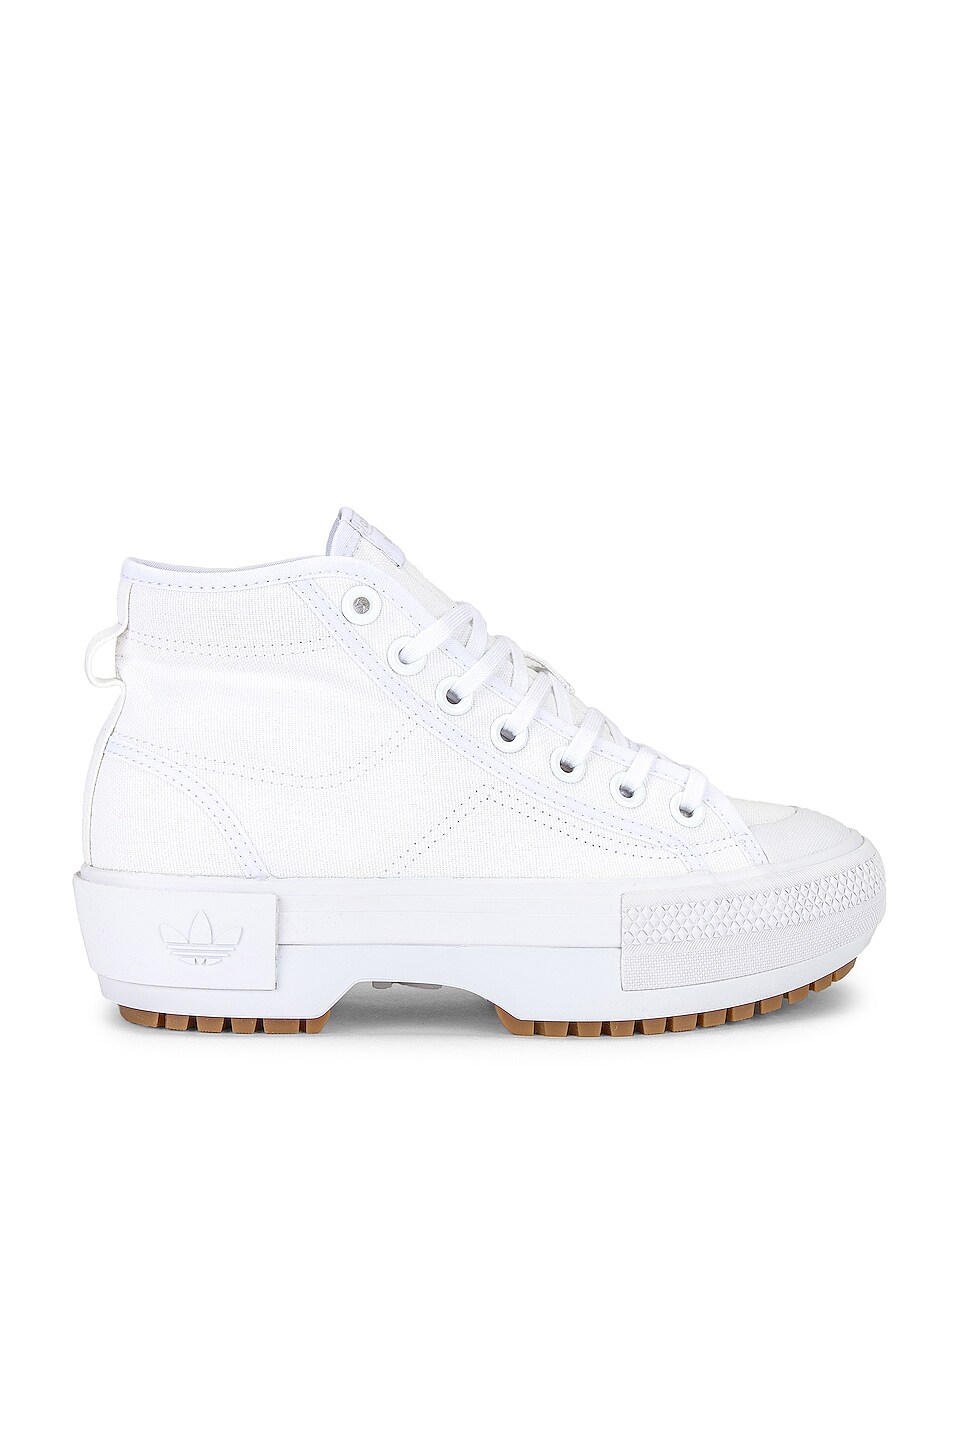 adidas Originals Nizza Trek Sneaker in White | REVOLVE